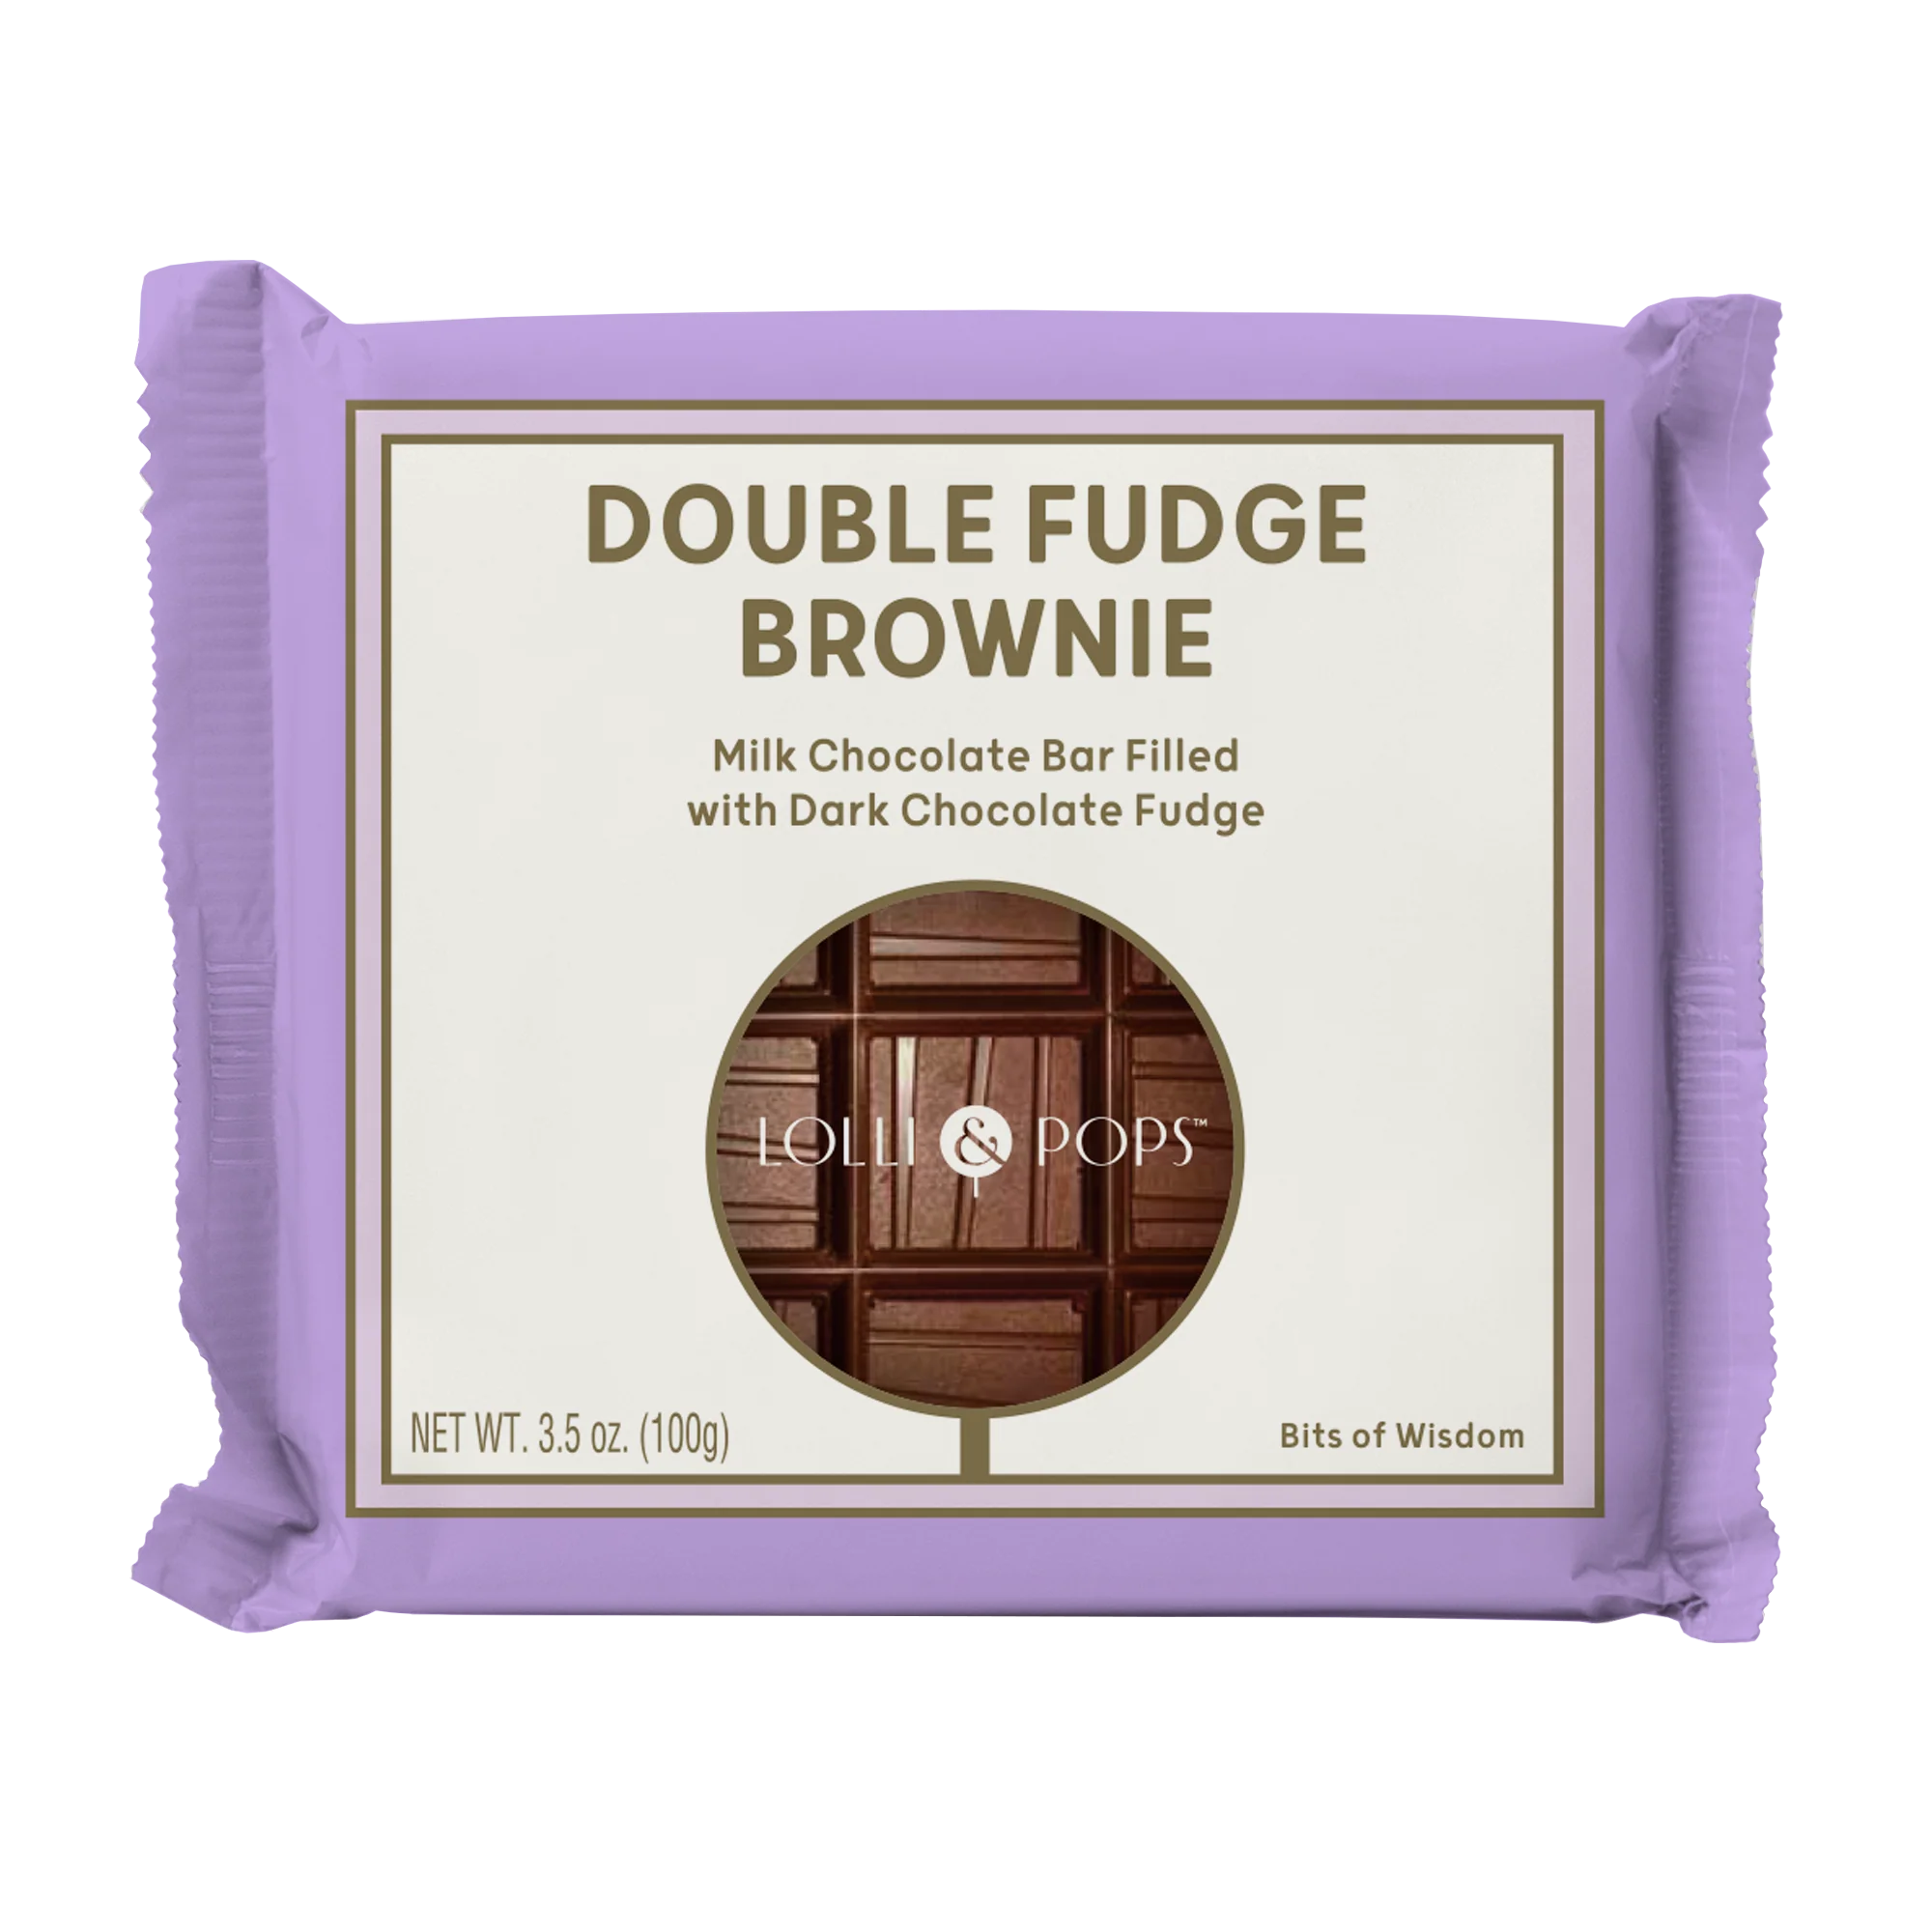 Double Fudge Brownie Chocolate Bar